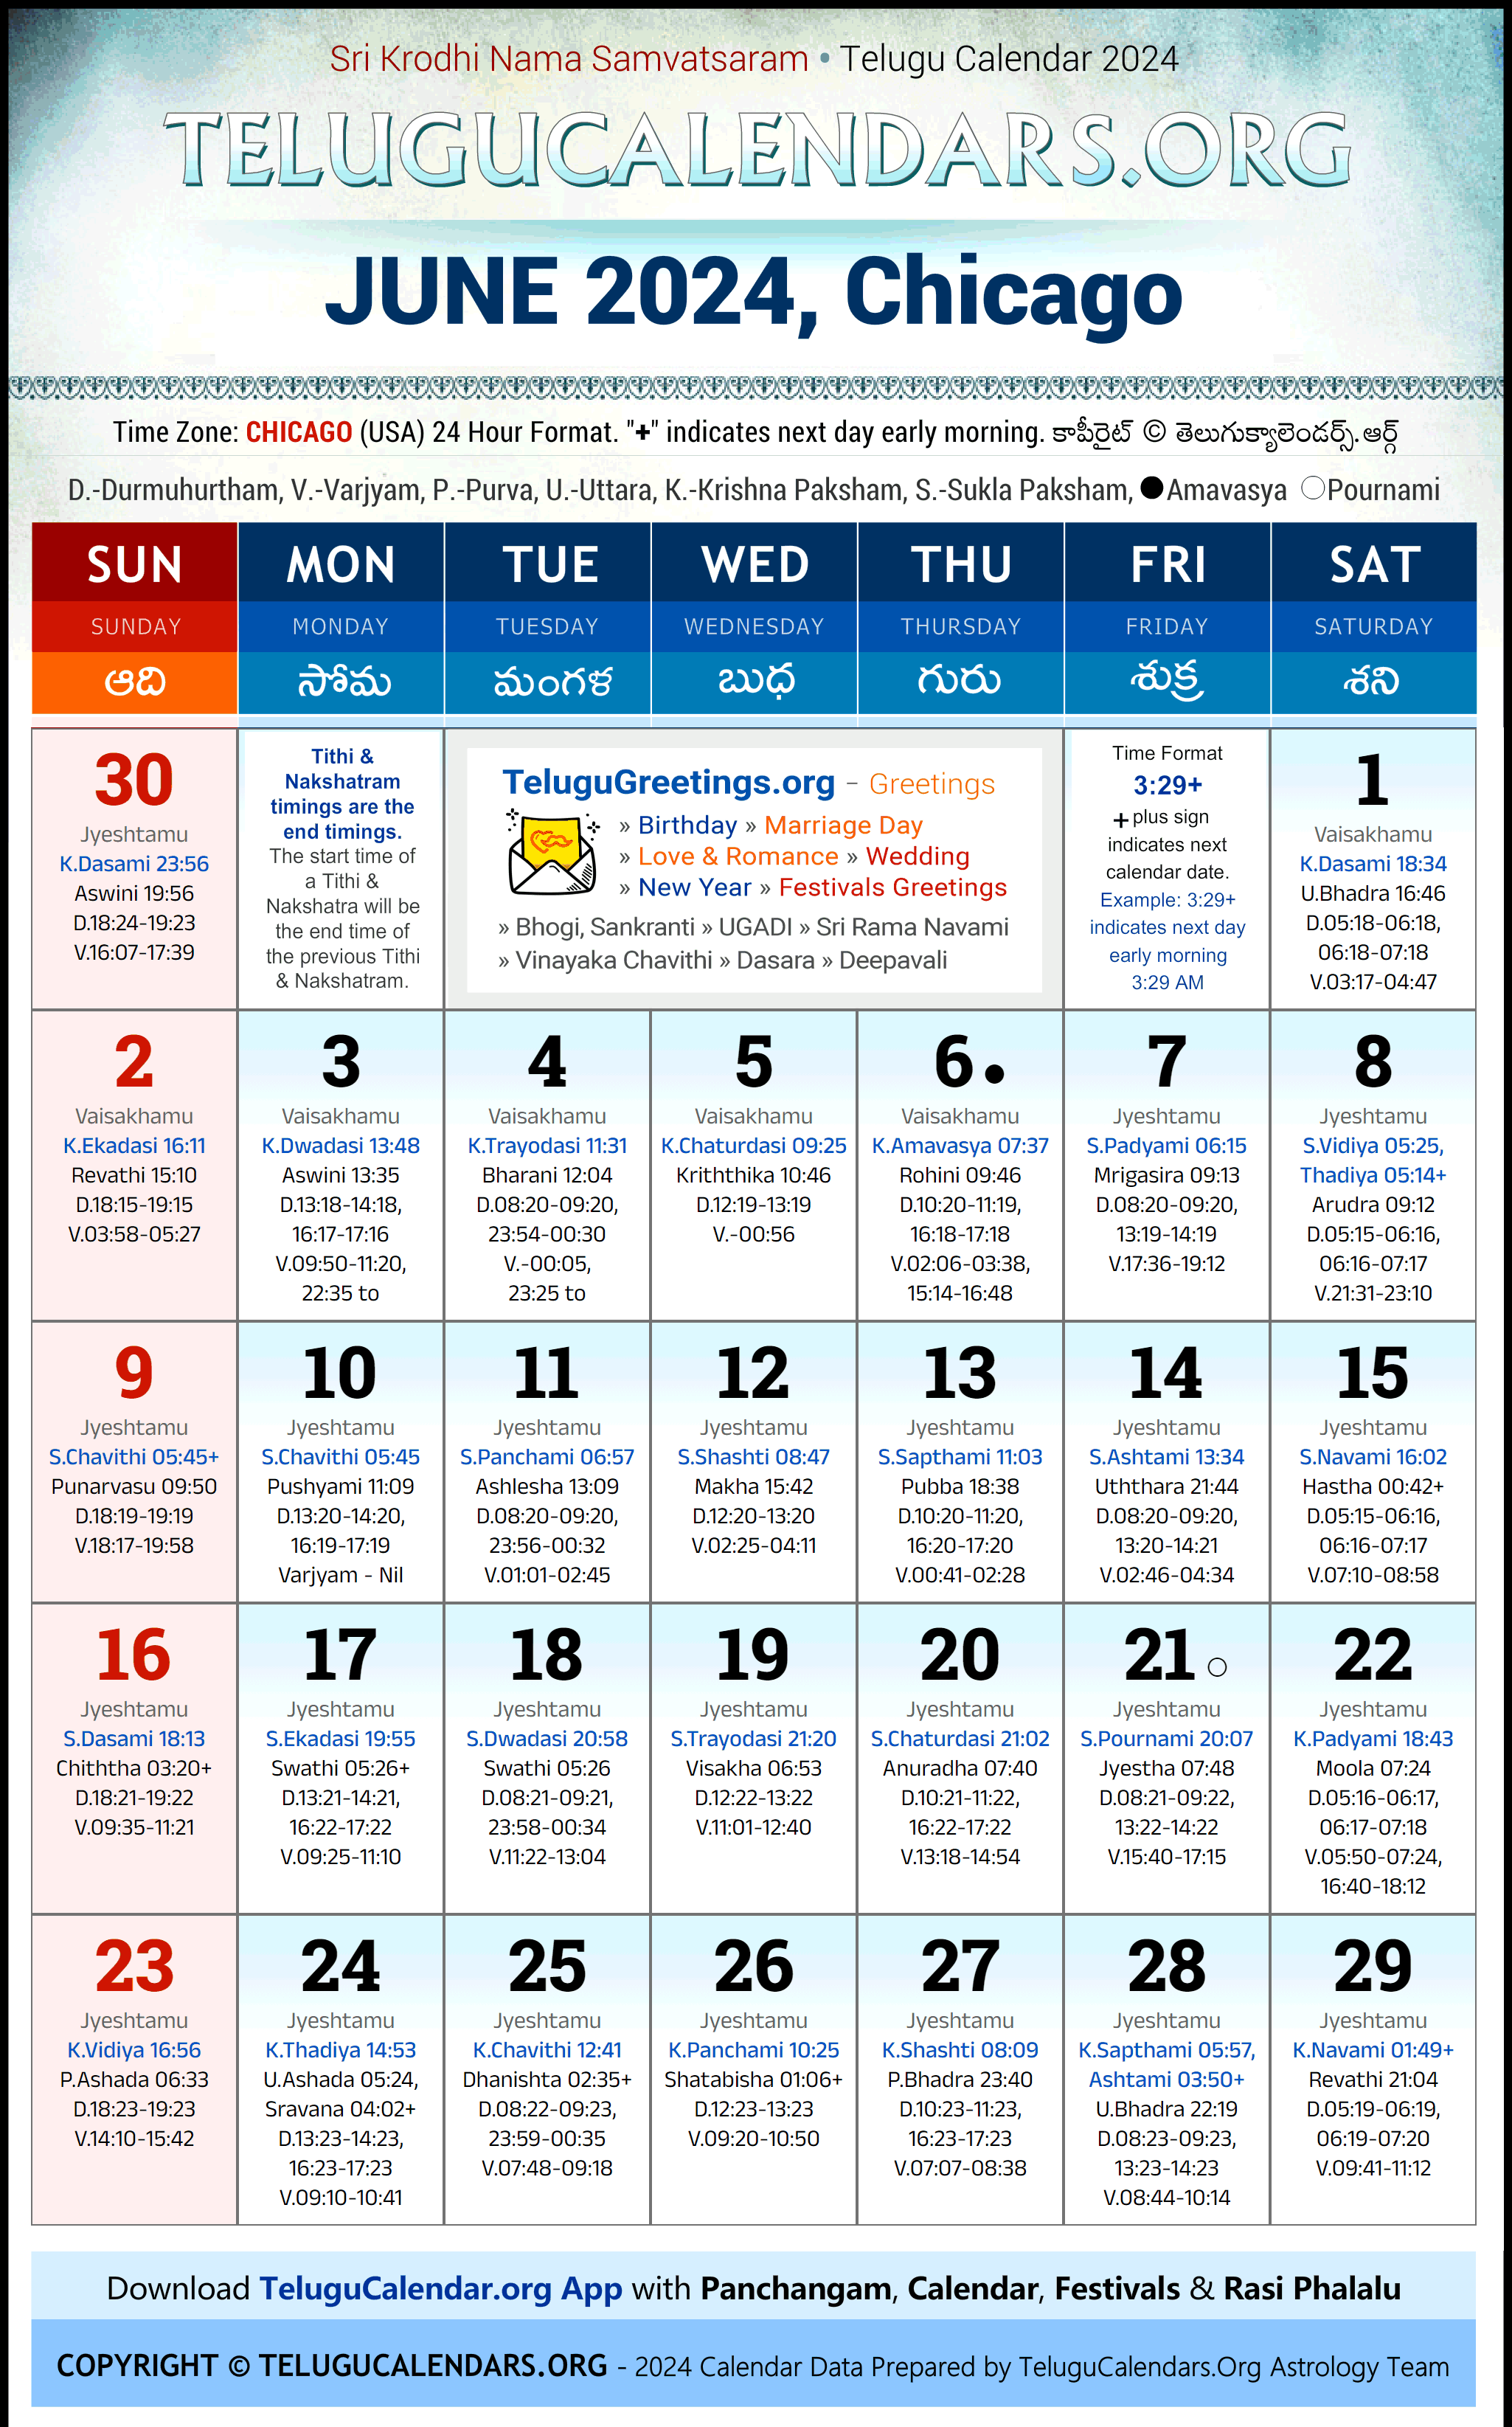 Telugu Calendar 2024 June Festivals for Chicago